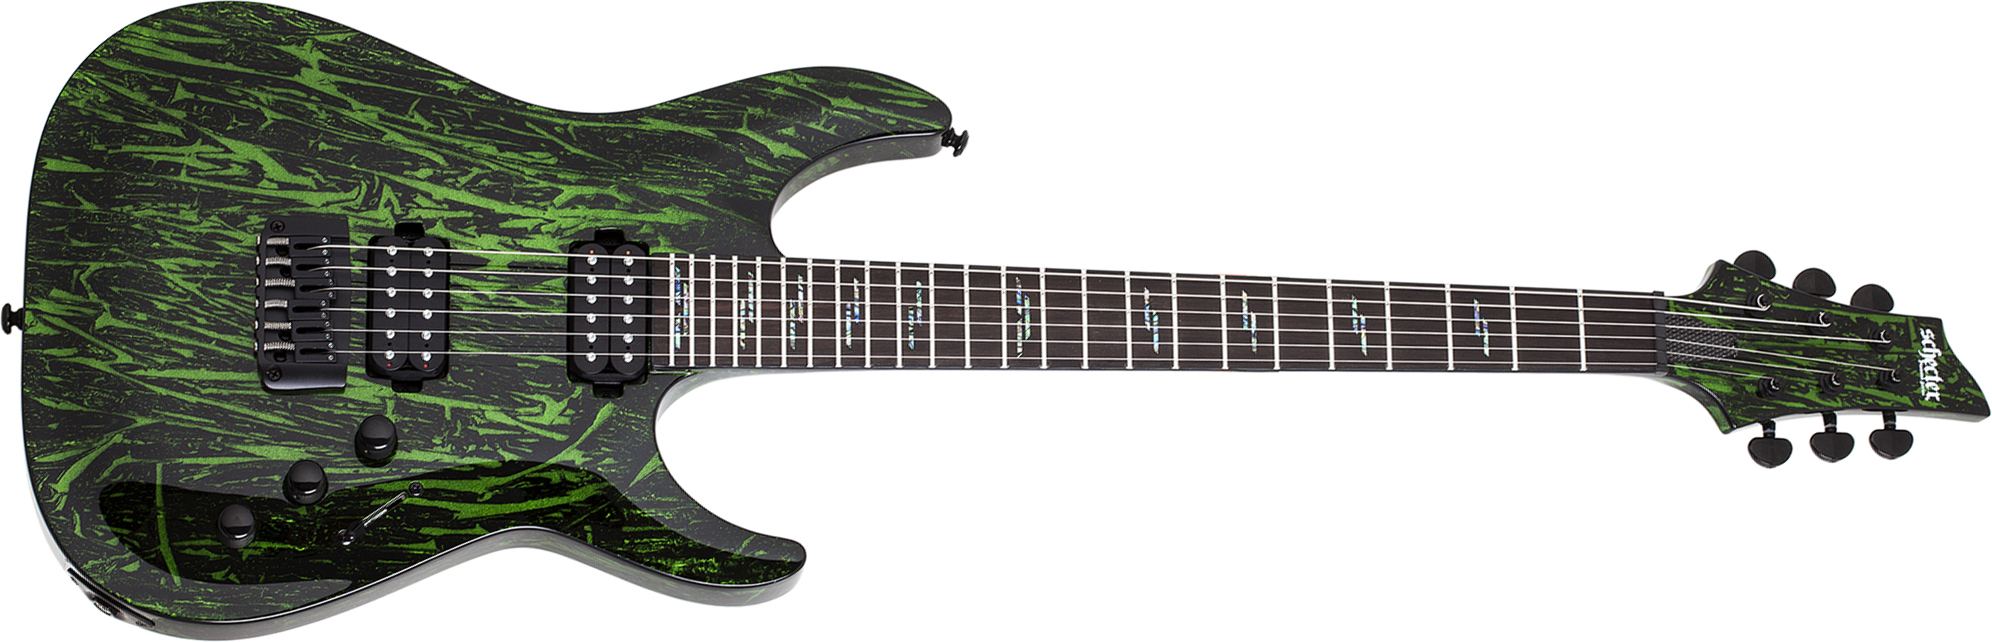 Schecter C-1 Silver Mountain 2h Ht Eb - Toxic Venom - Str shape electric guitar - Main picture